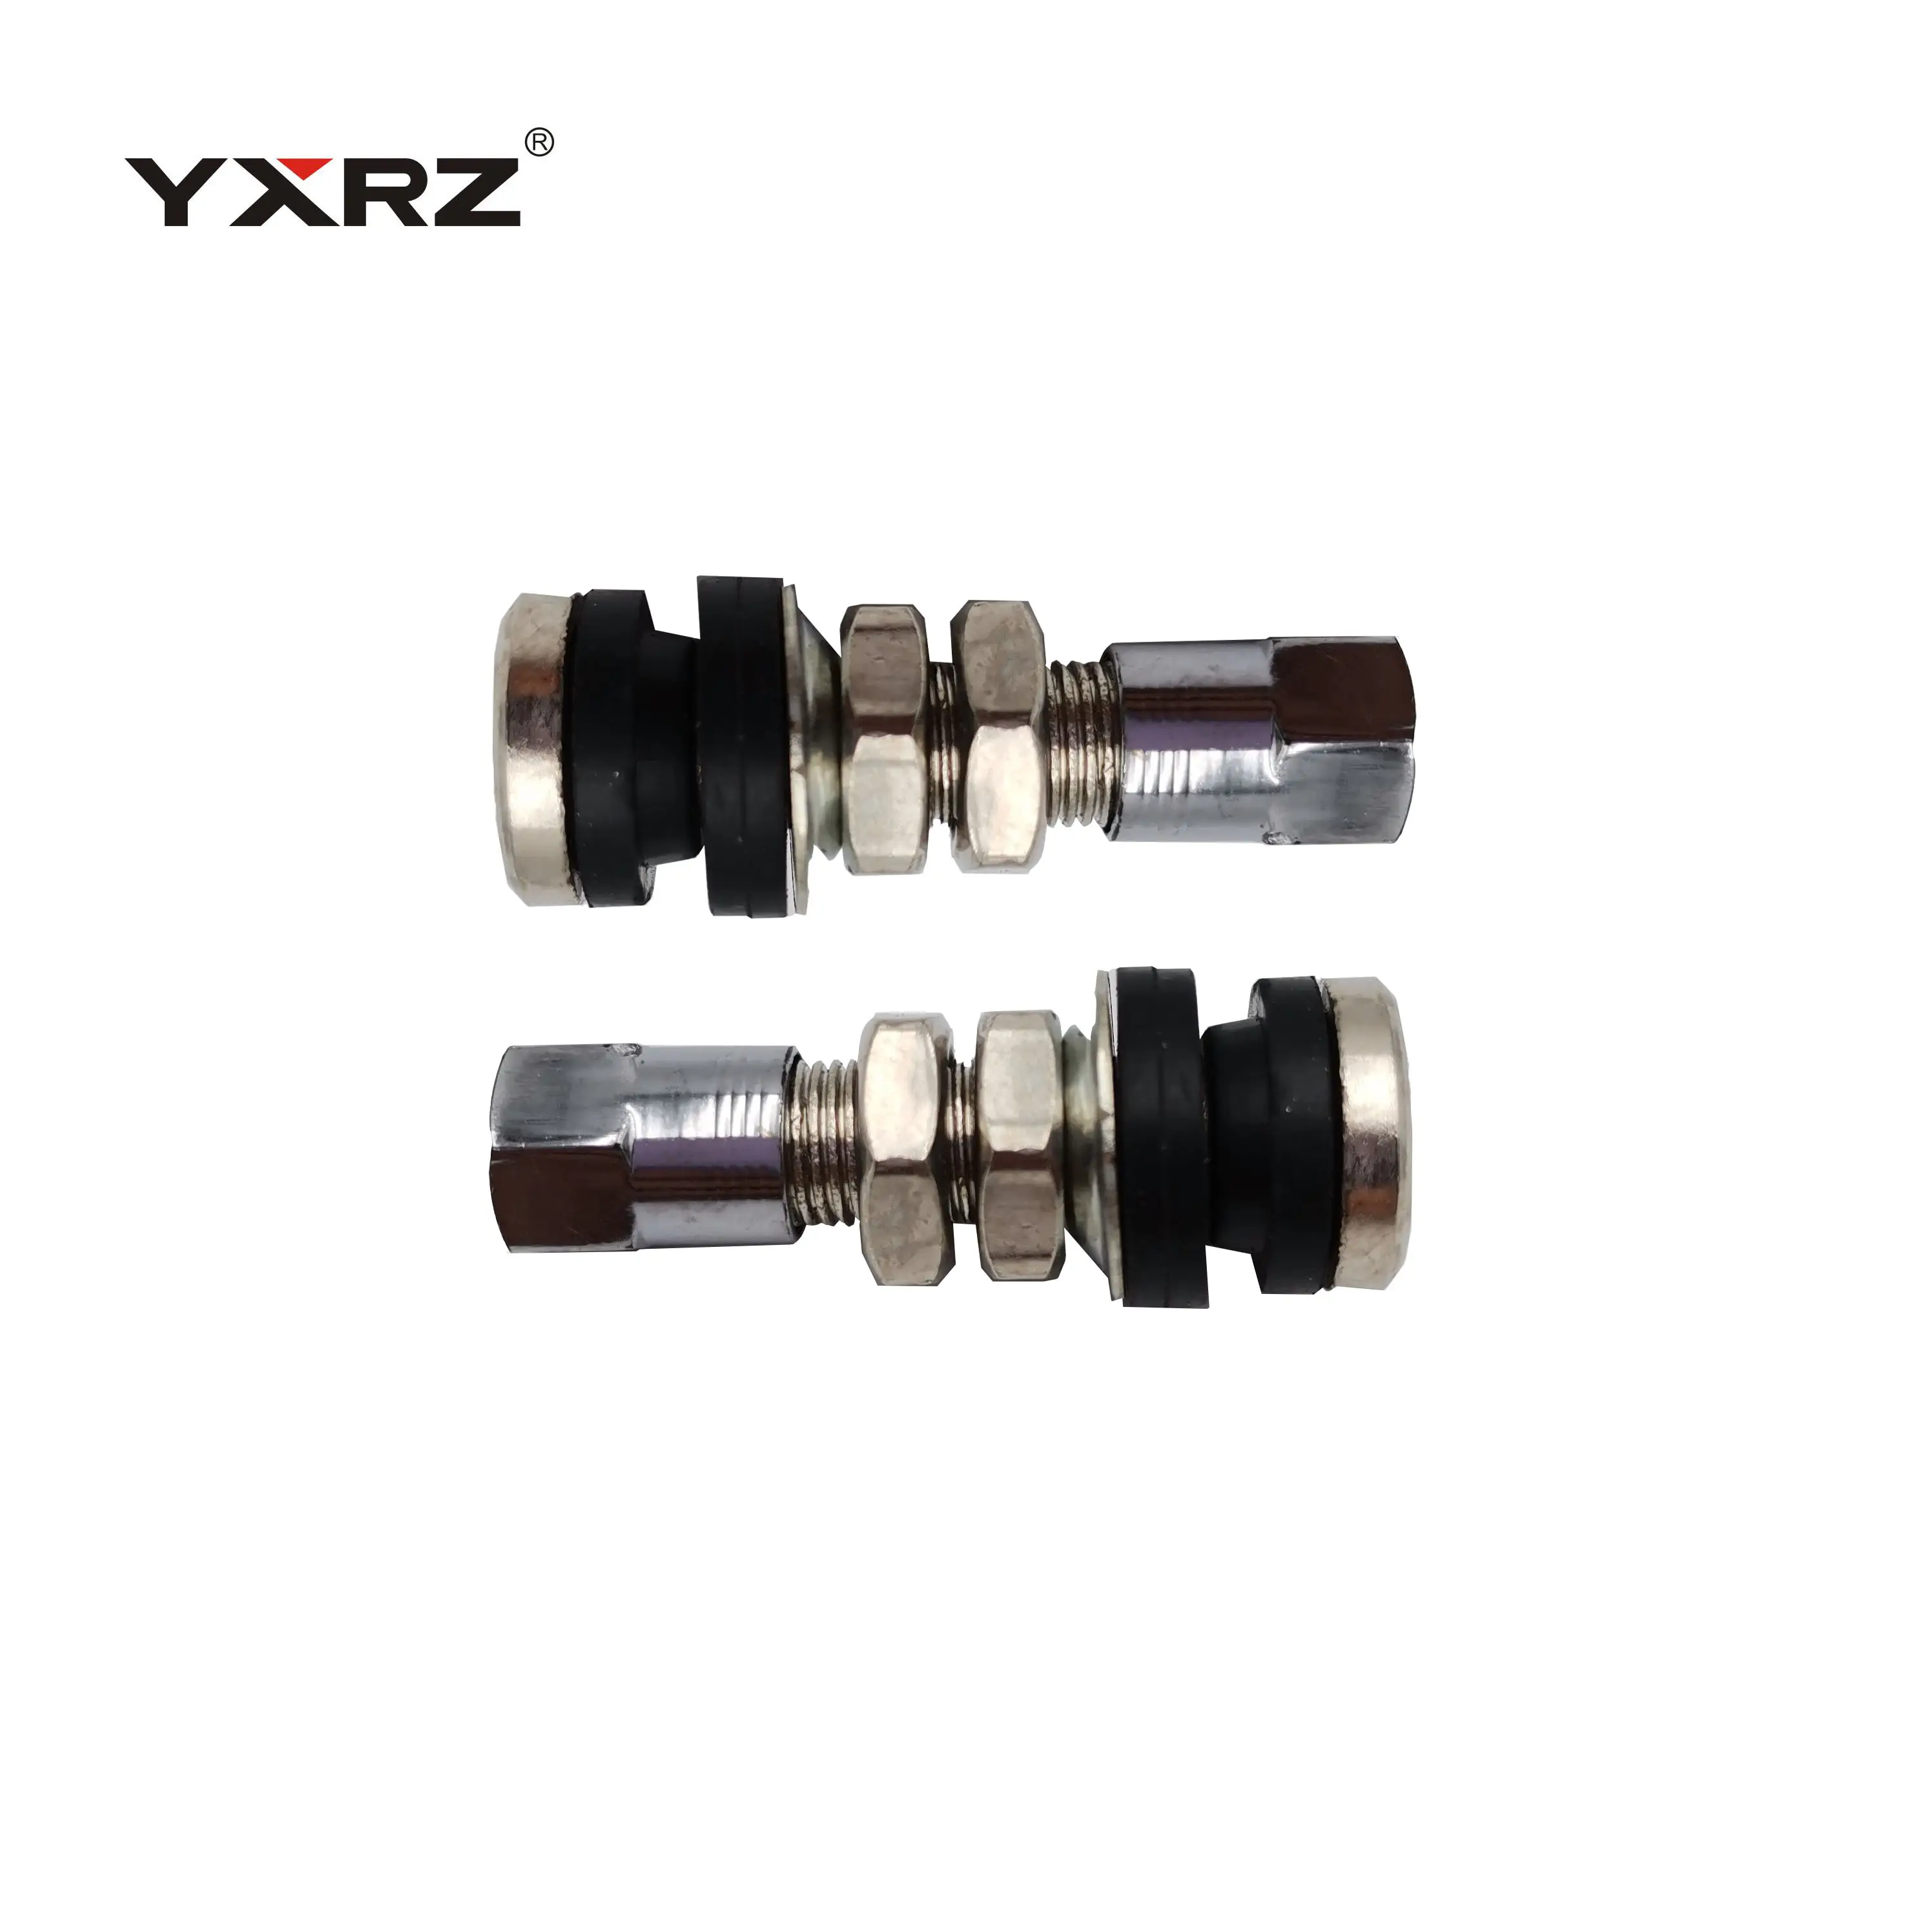 China tire valves manufacturer TR161 -40 flush mount high pressure metal valve stems bolt in motorcycle tire valve stem